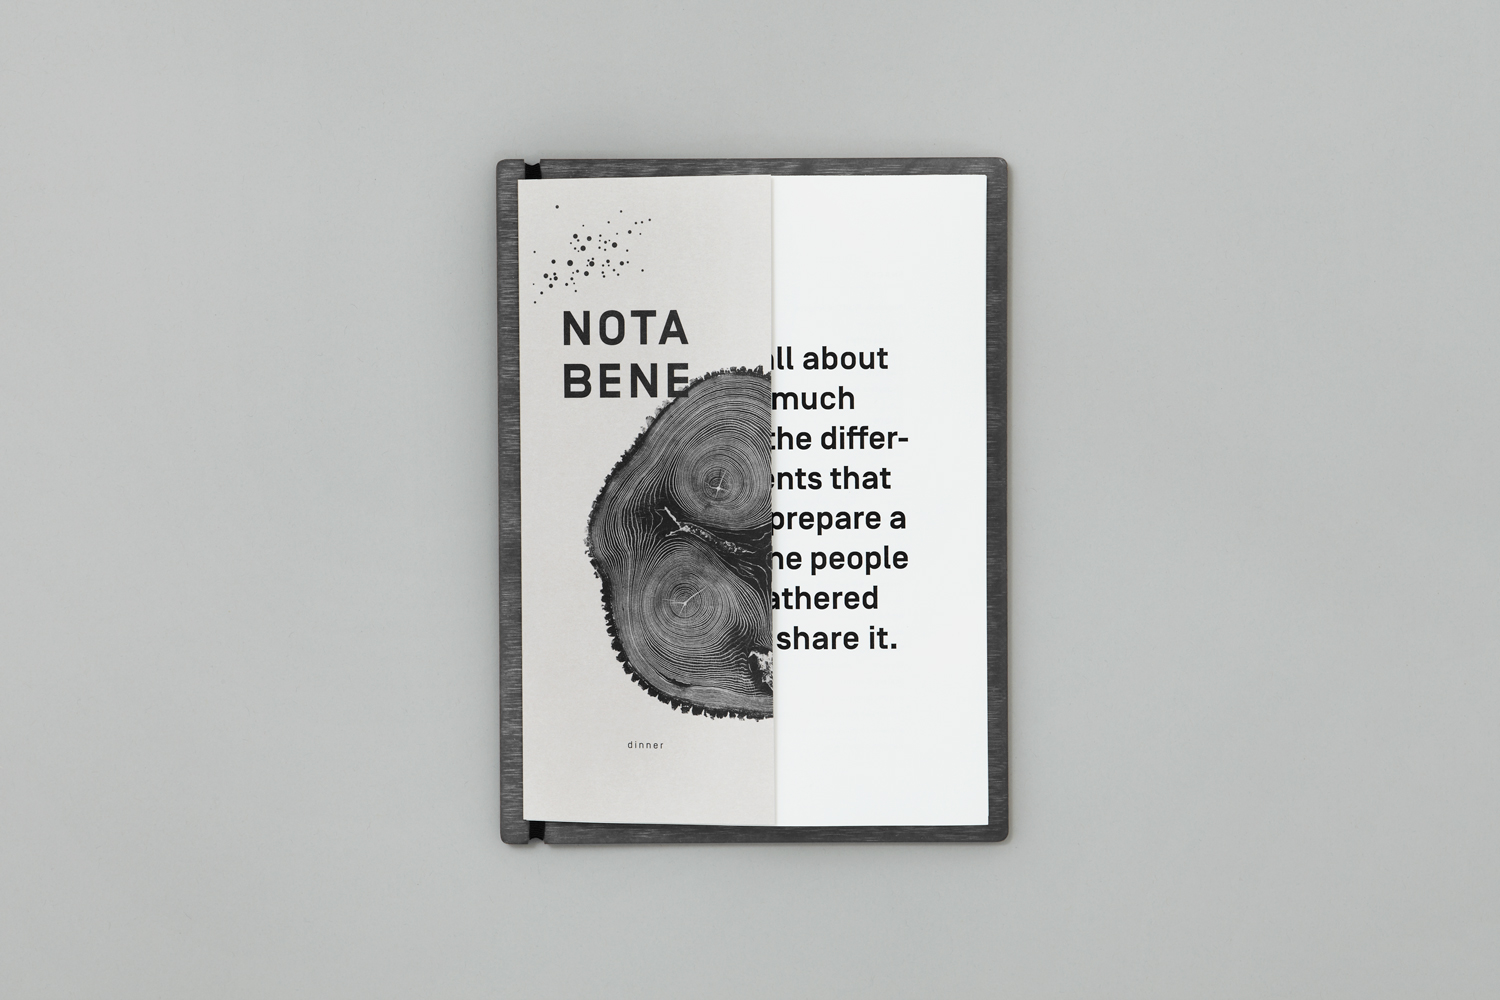 Brand identity and menu for Toronto restaurant Nota Bene by graphic design studio Blok, Canada